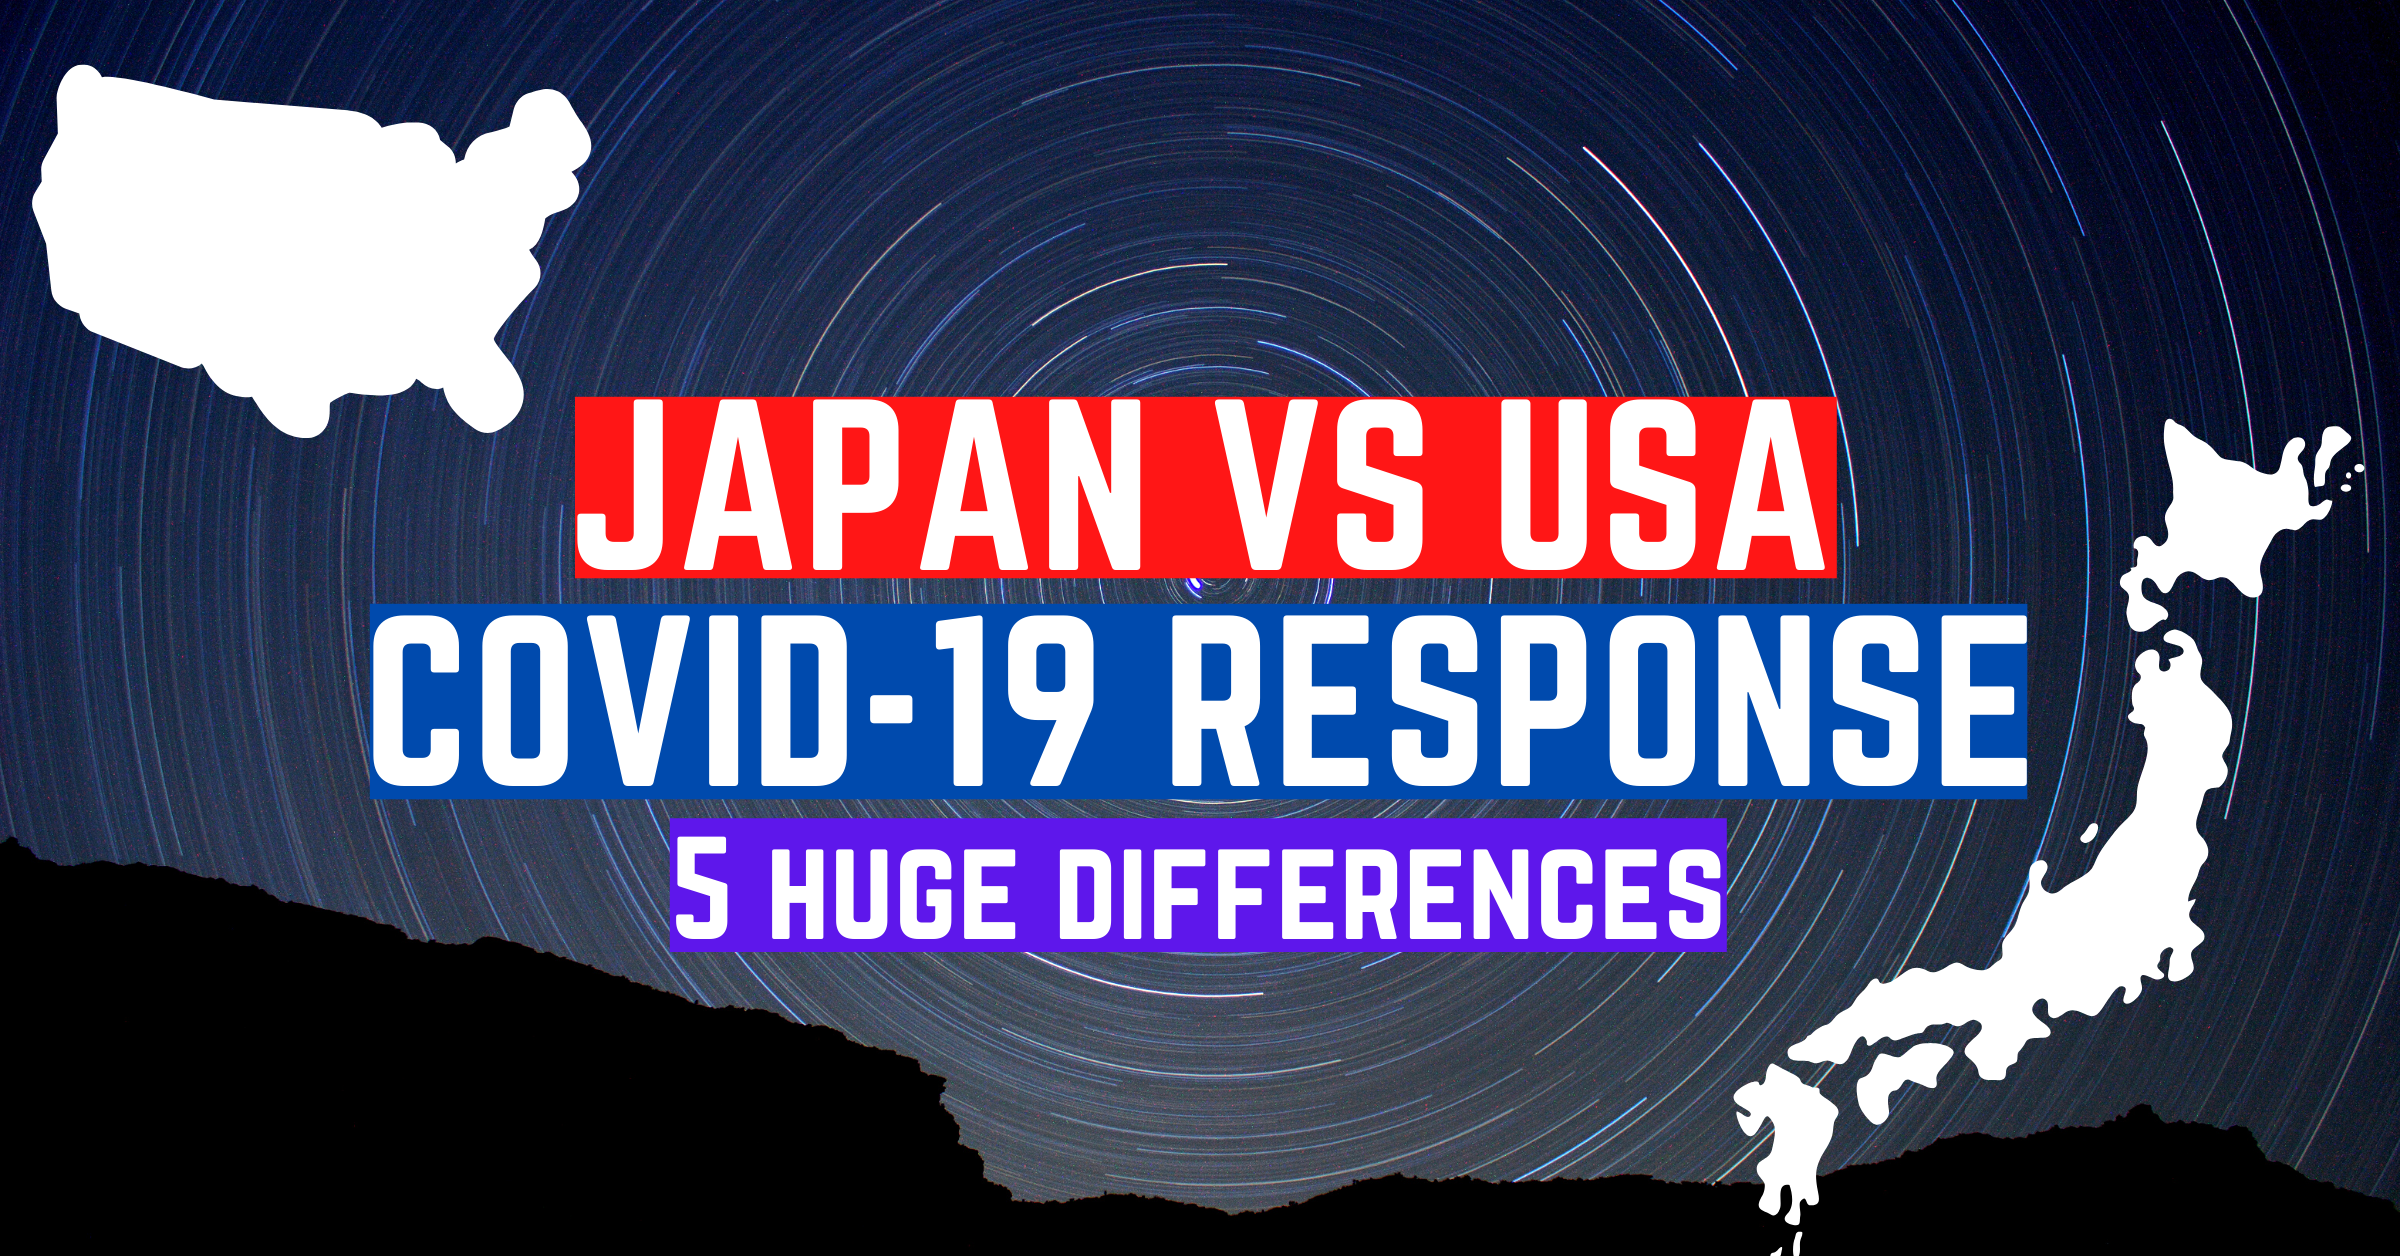 Japan vs USA COVID-19 Response